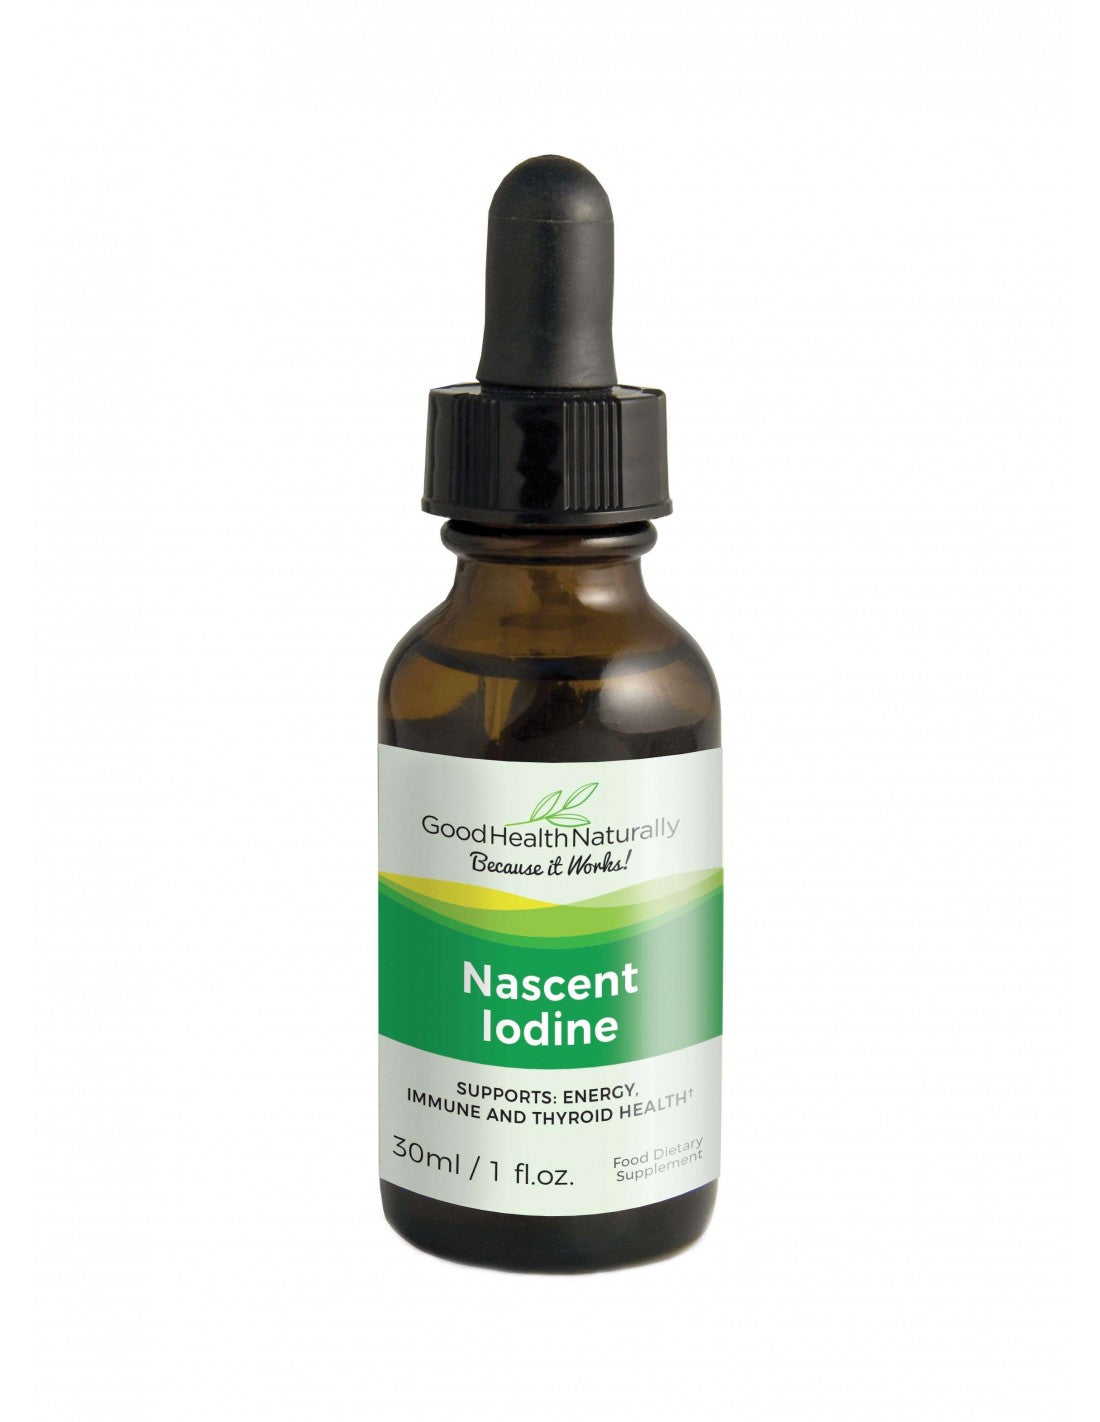 Nascent iodine 30ml bottle - เอ็มโพเรี่ยมสุขภาพ